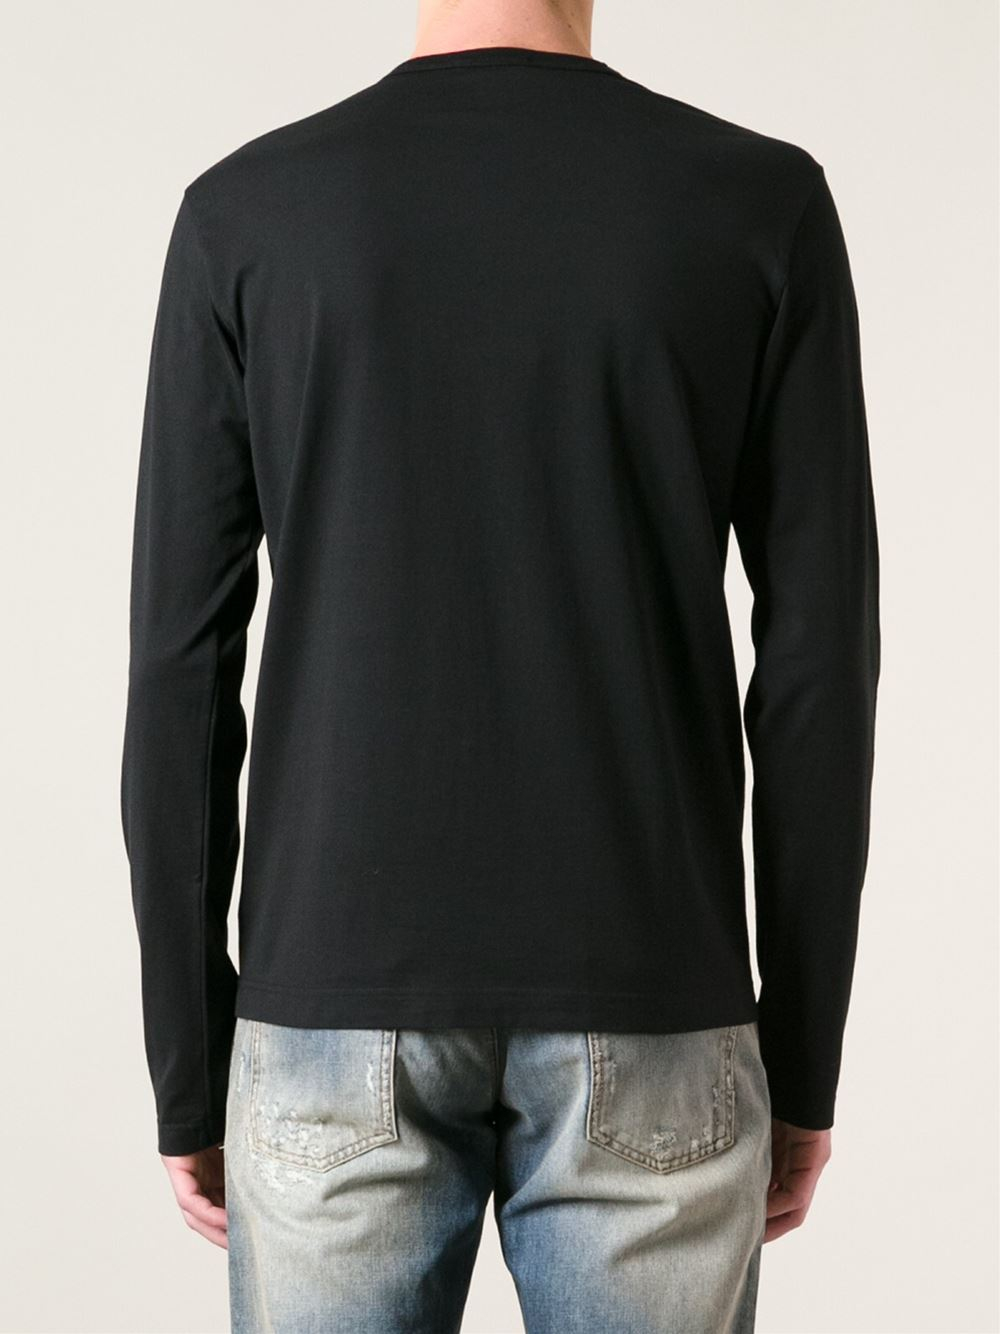 Lyst - Dolce & Gabbana Long Sleeve T-shirt in Black for Men